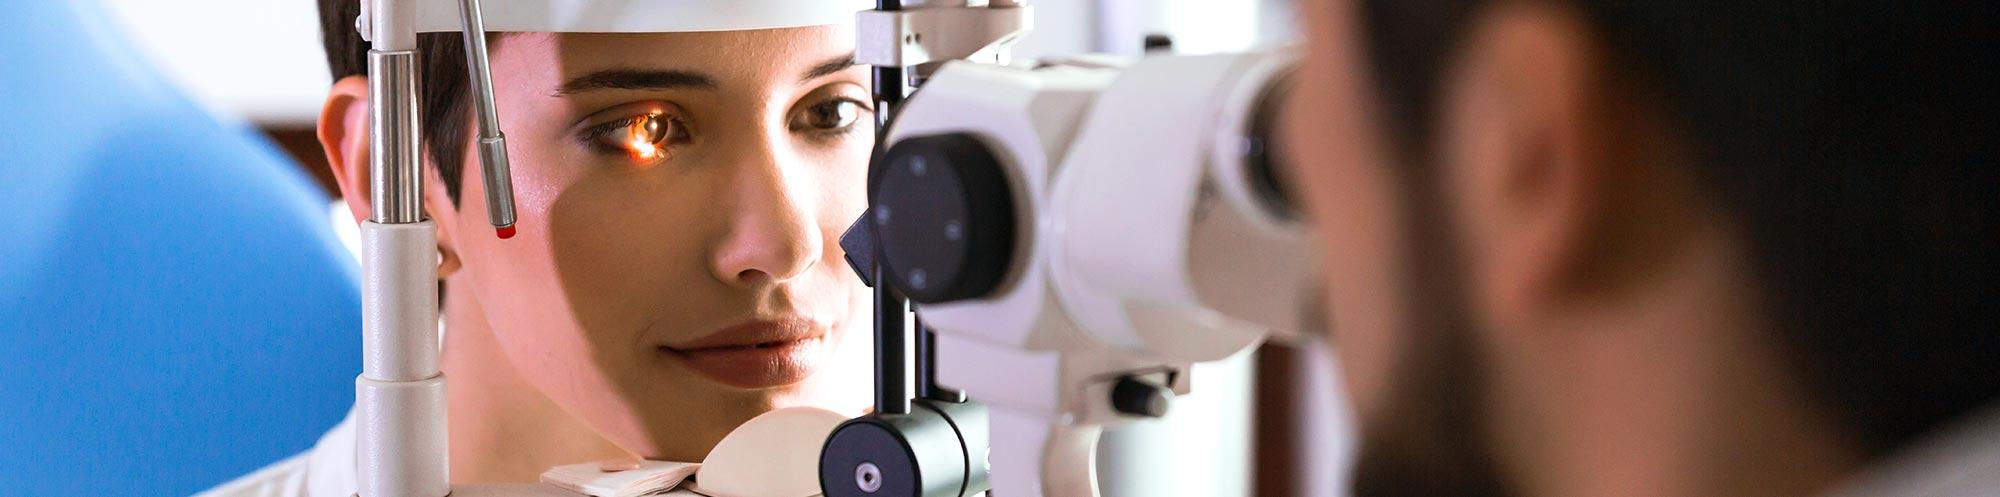 Diabetes & Auge - Augenarztpraxis Buchen